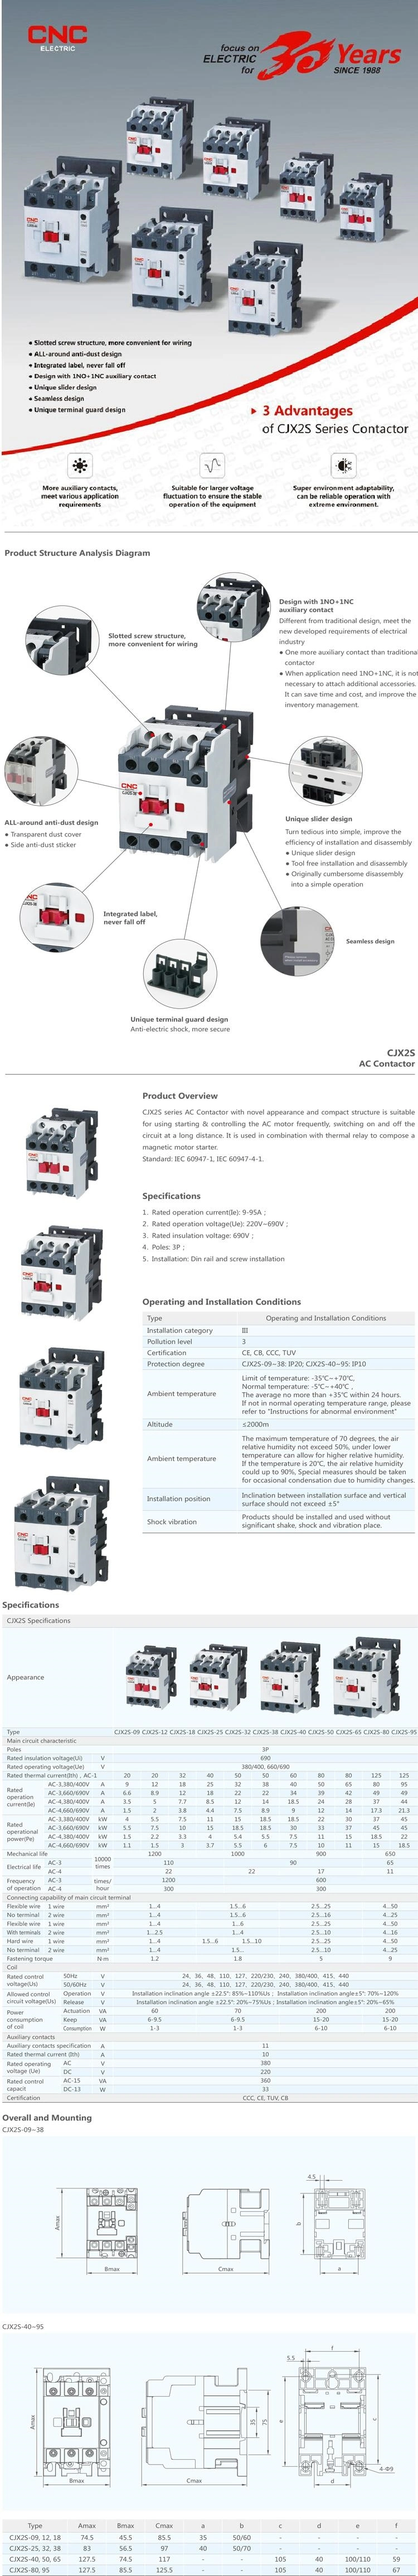 Newest Design 3phase 660V AC Contactor 3phase 440V AC Contactor 3p/4p 380V AC Contactor